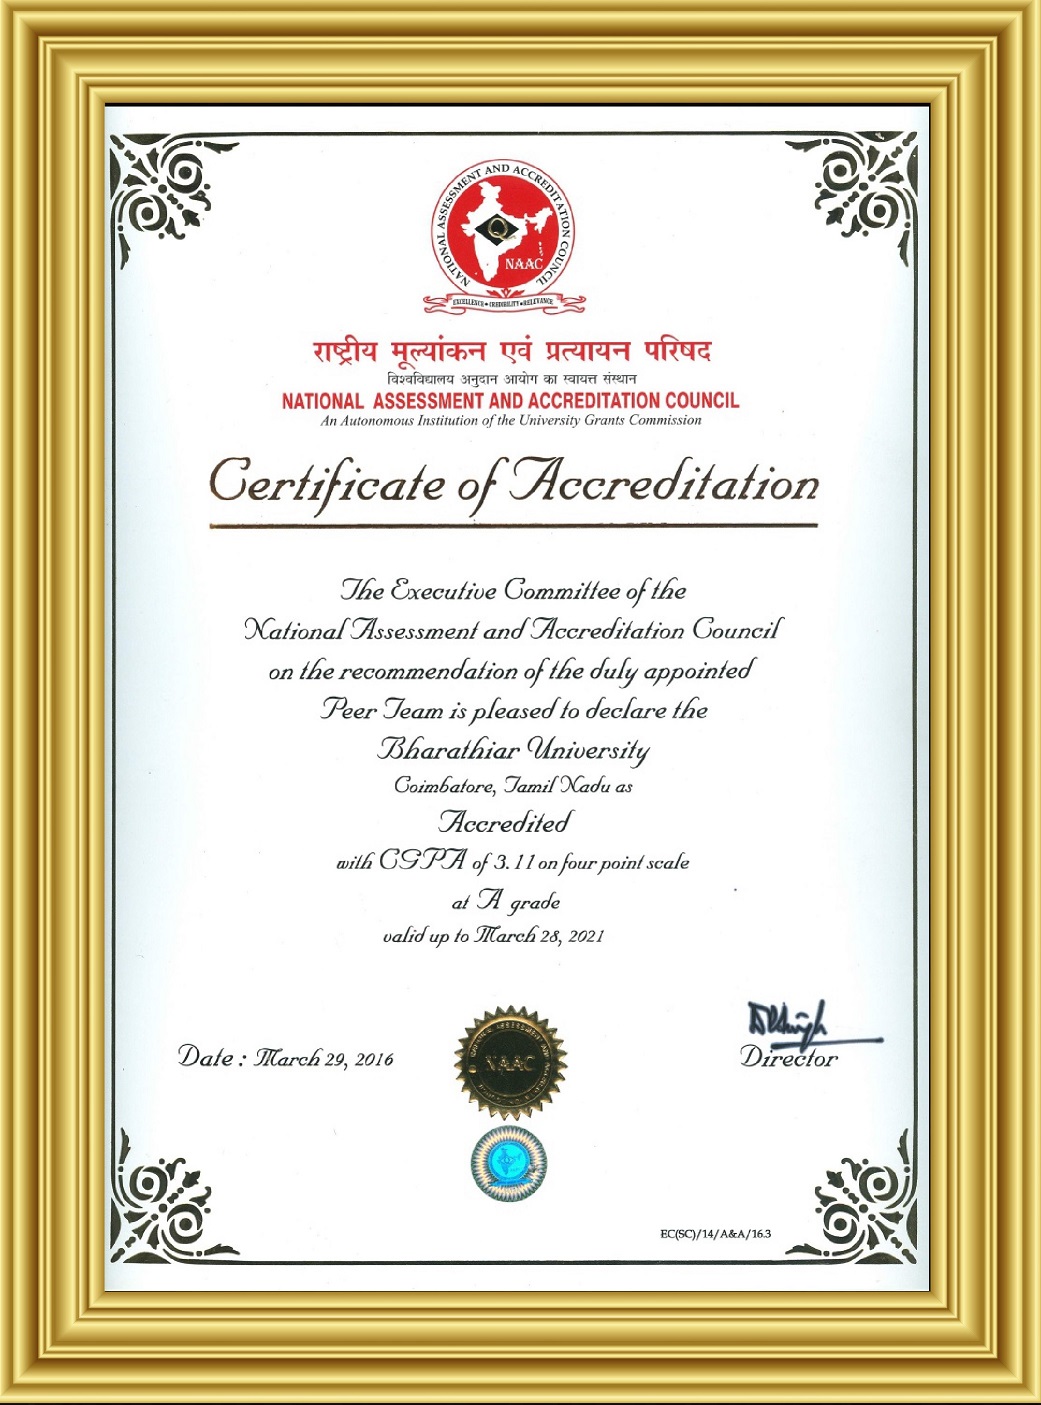 "NAAC Certificate"